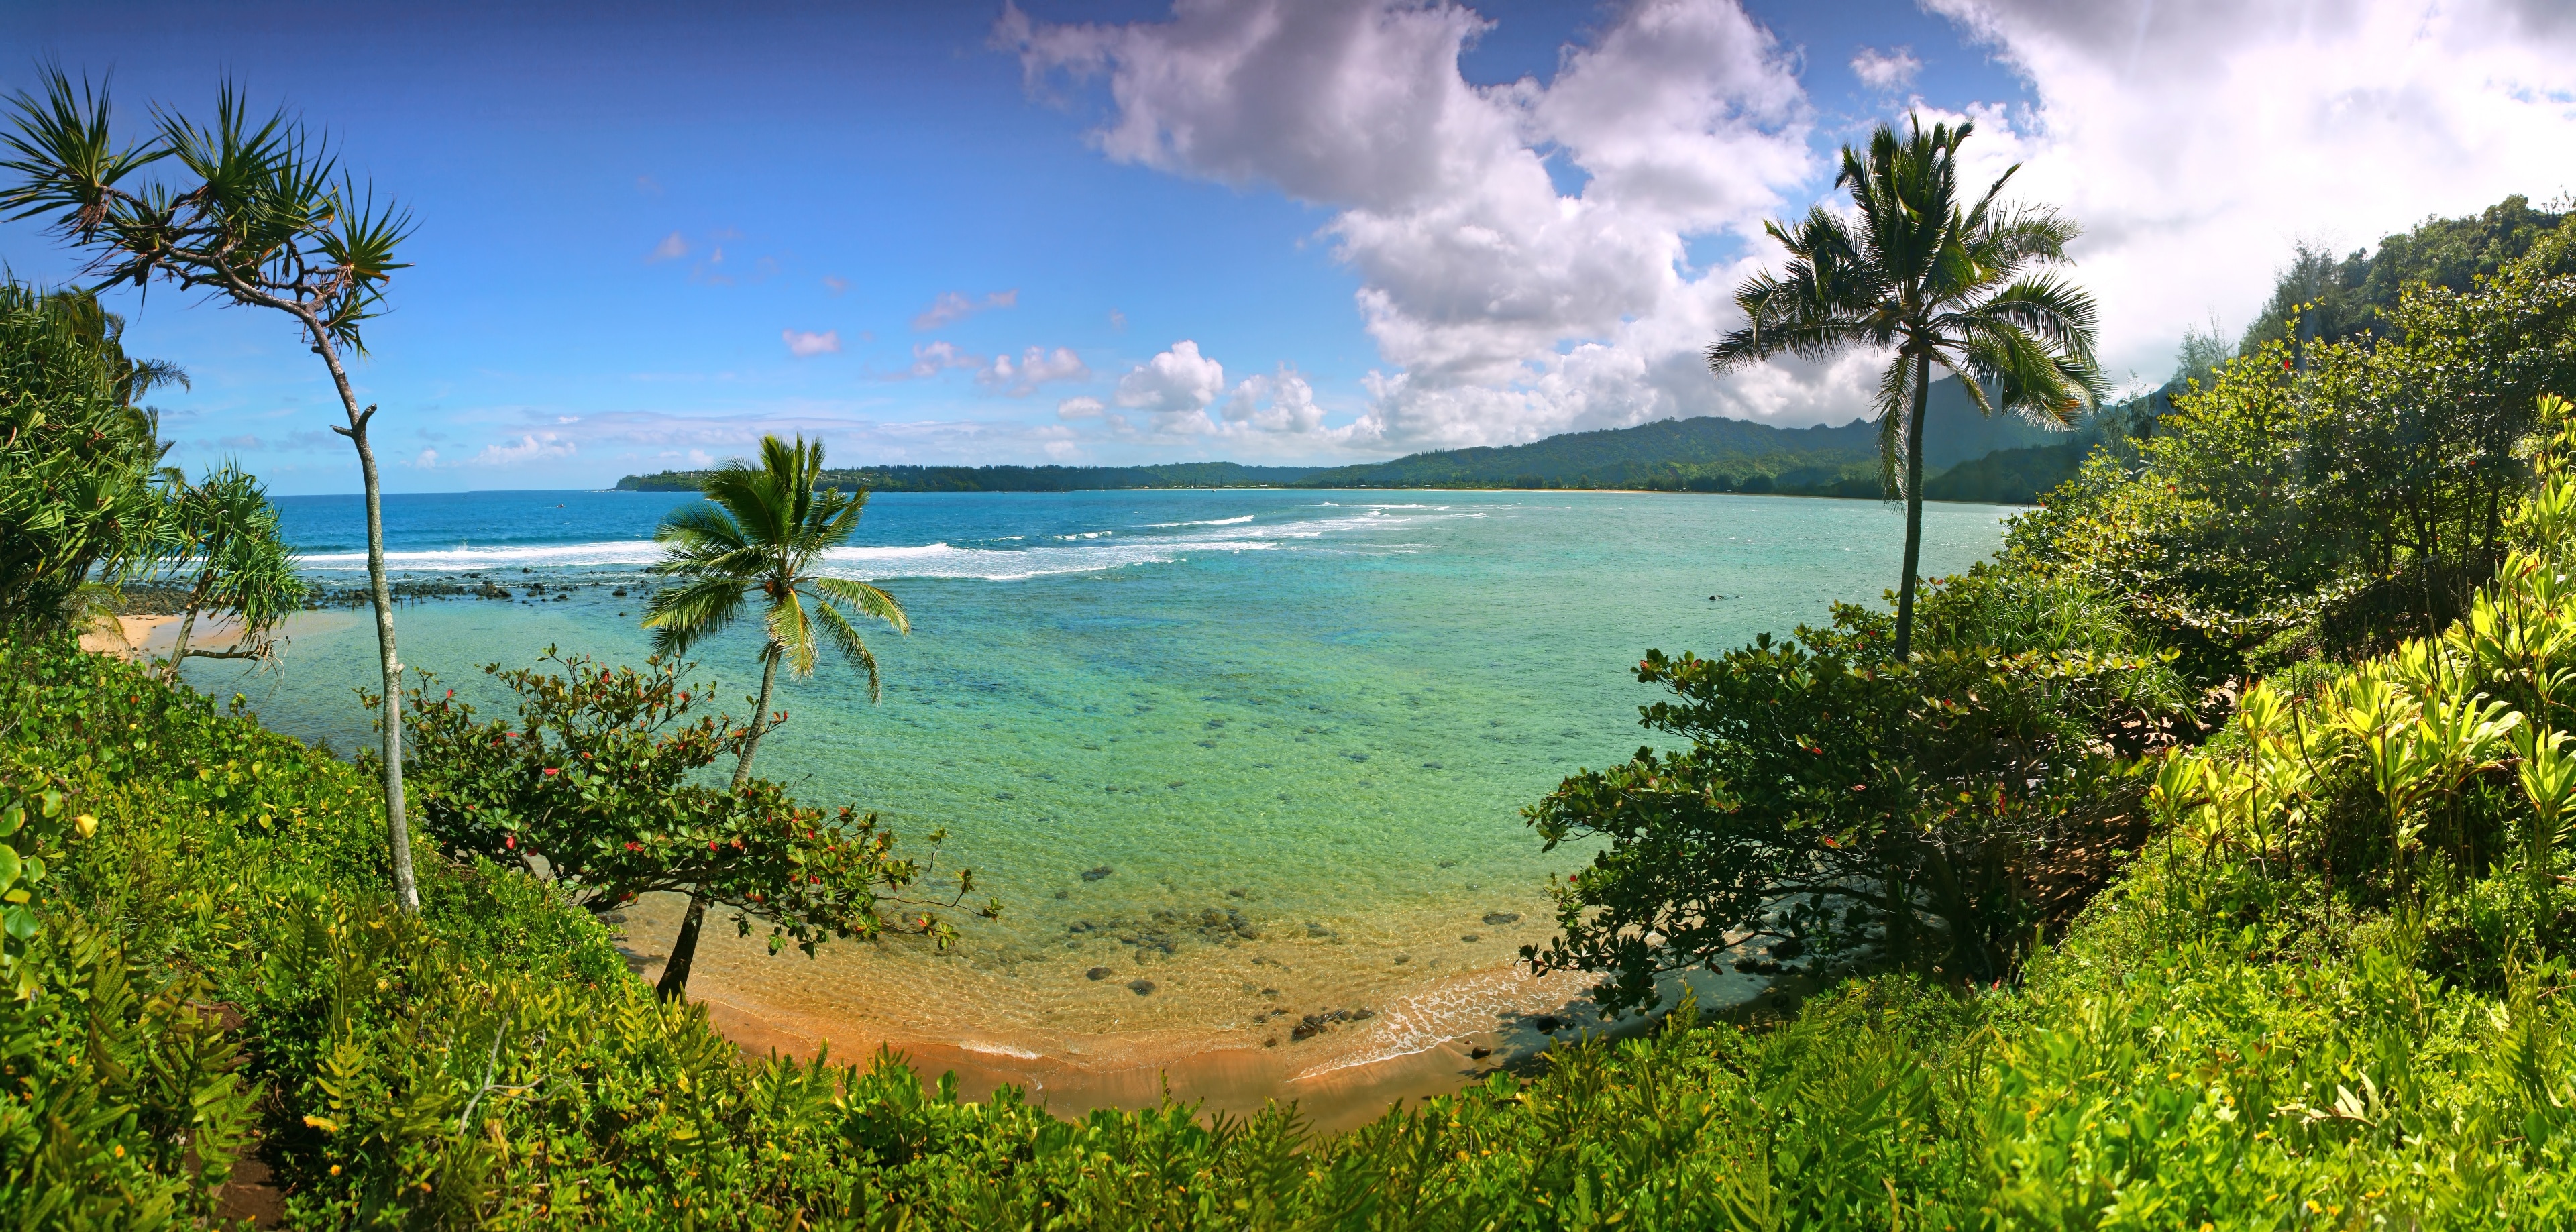 Kauai, Hawaii, United States of America